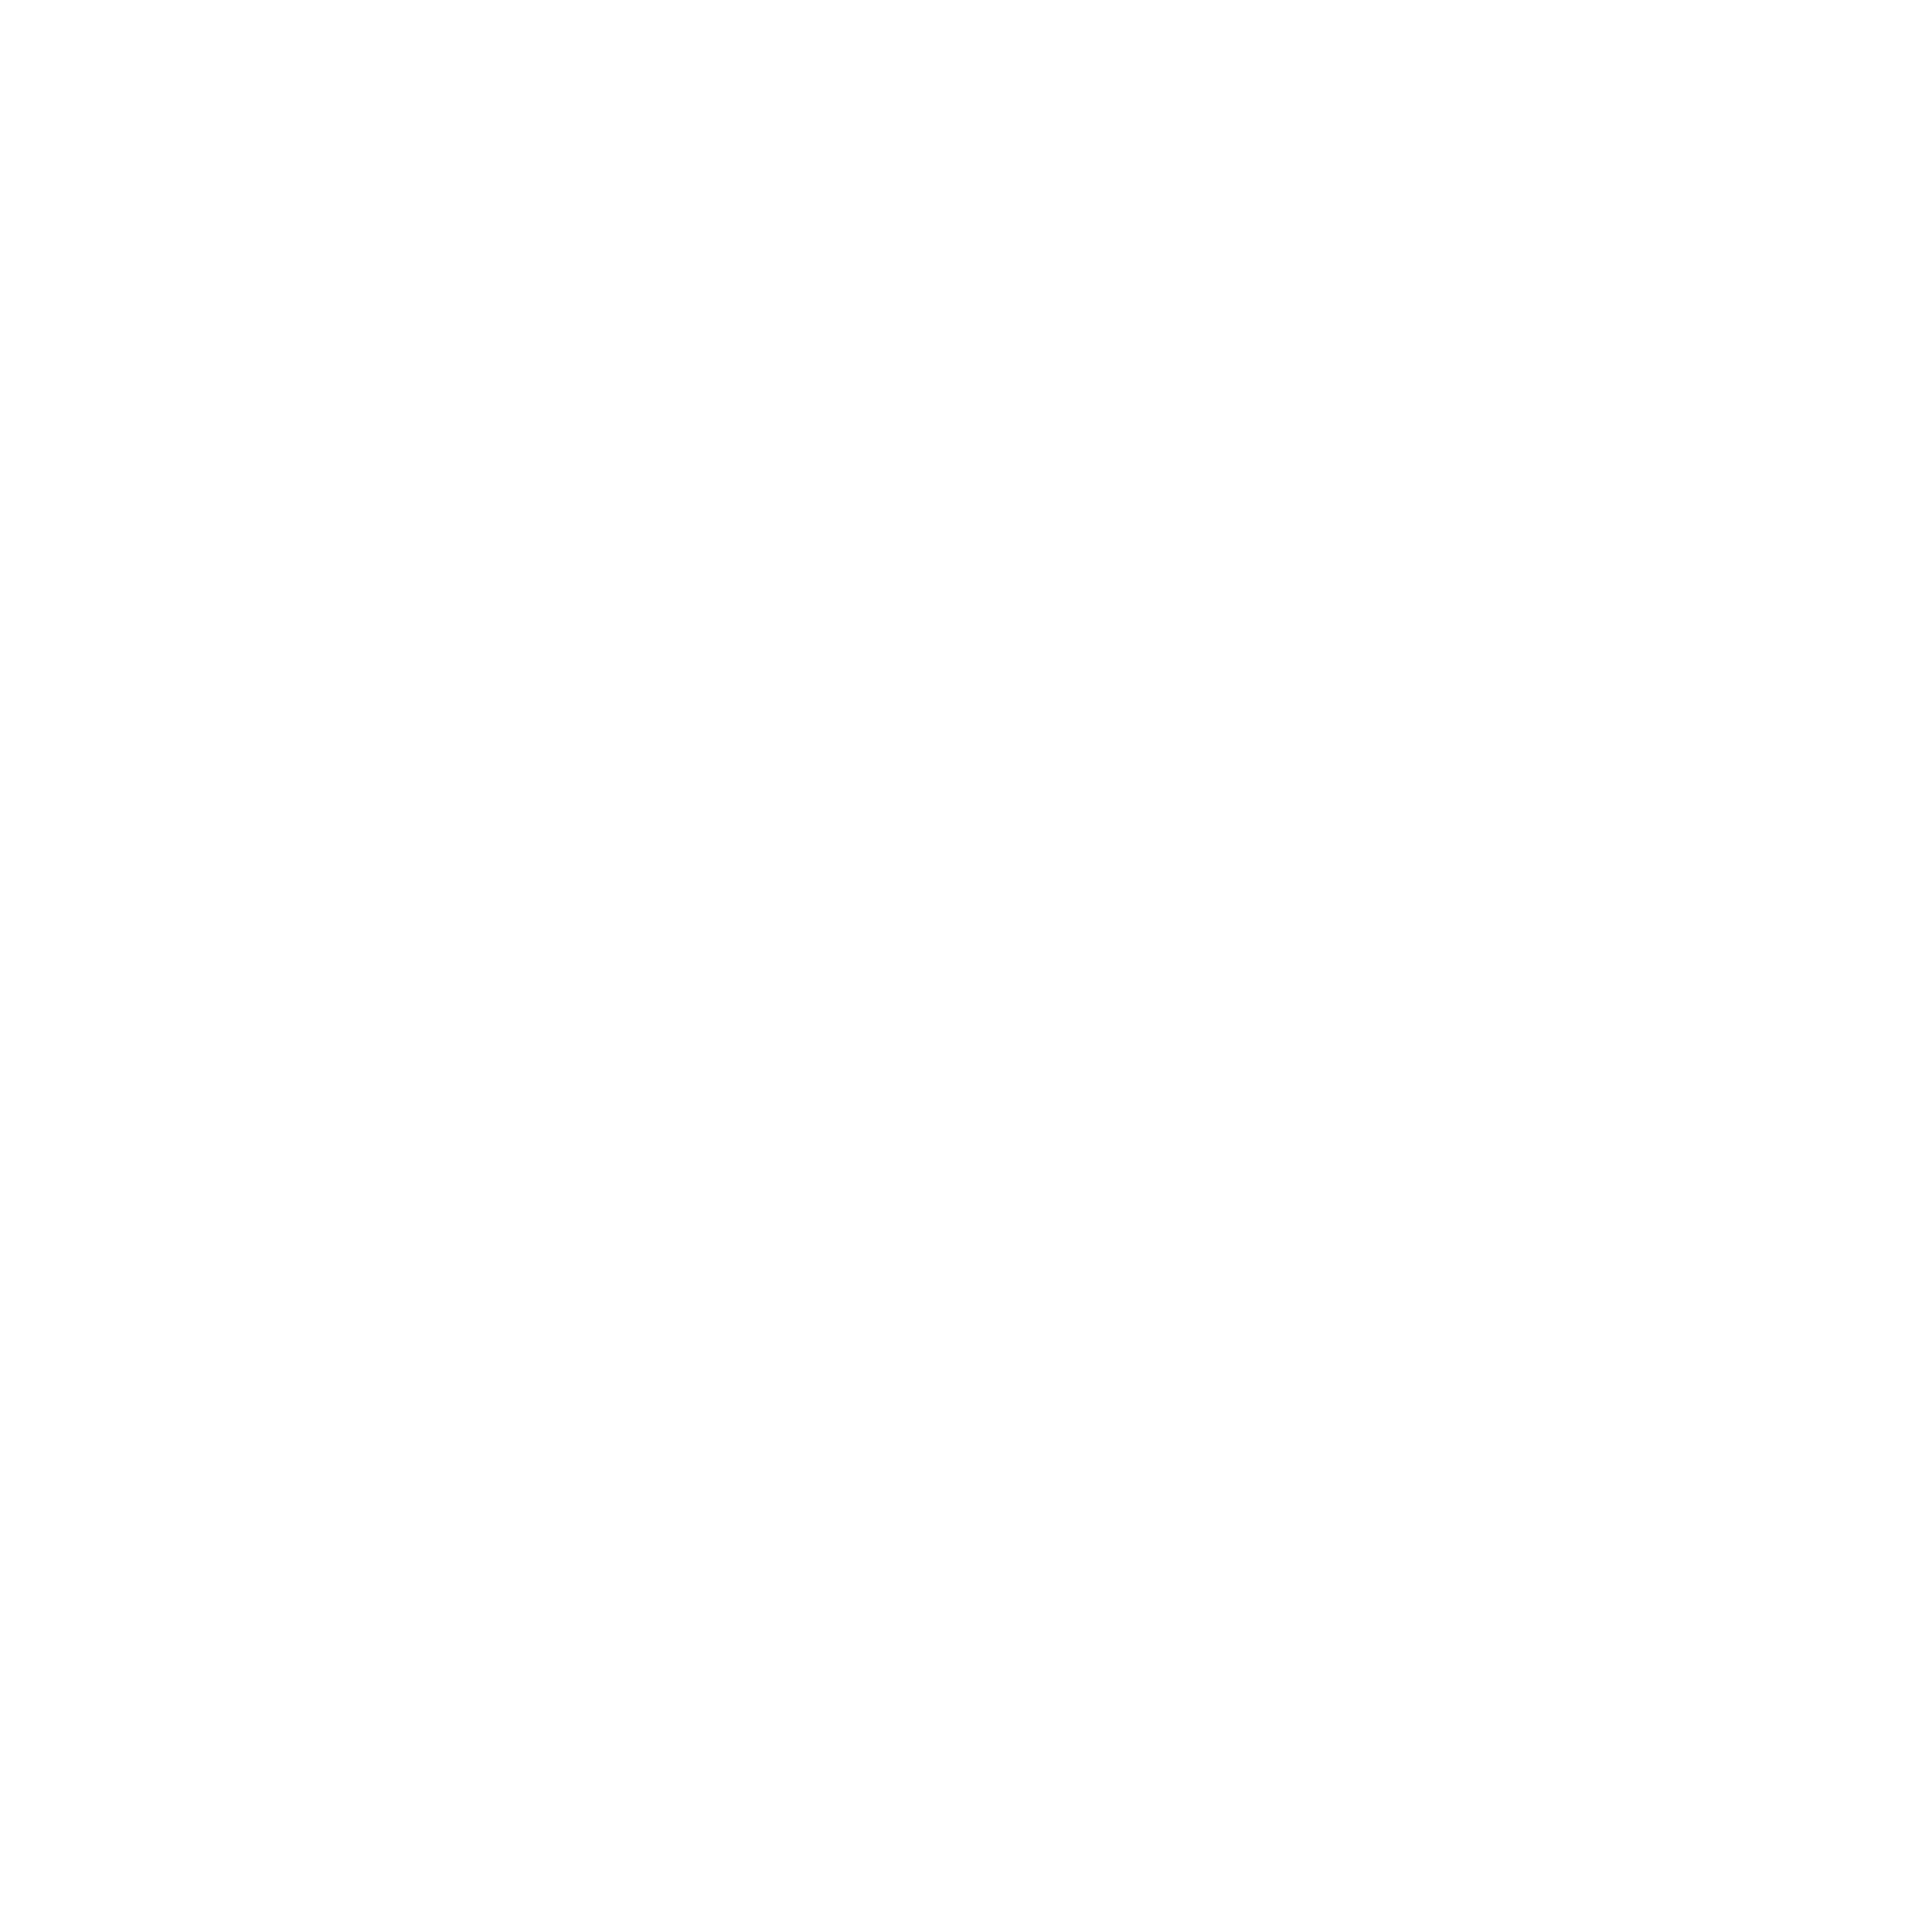 Bushido